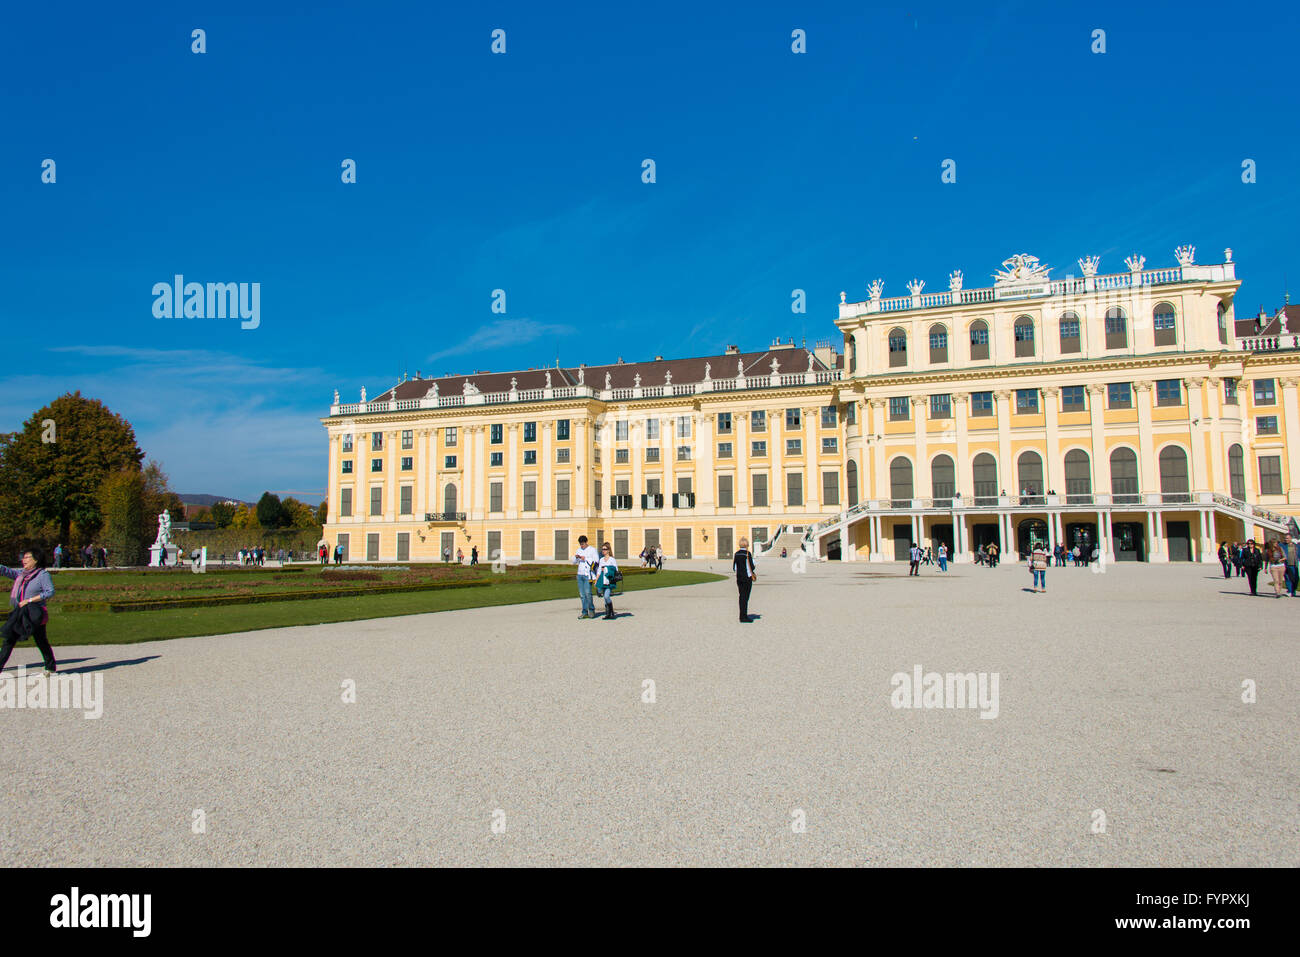 Vienna - OCTOBER 14: Schonbrunn Palace on October 14 in Vienna, Stock Photo